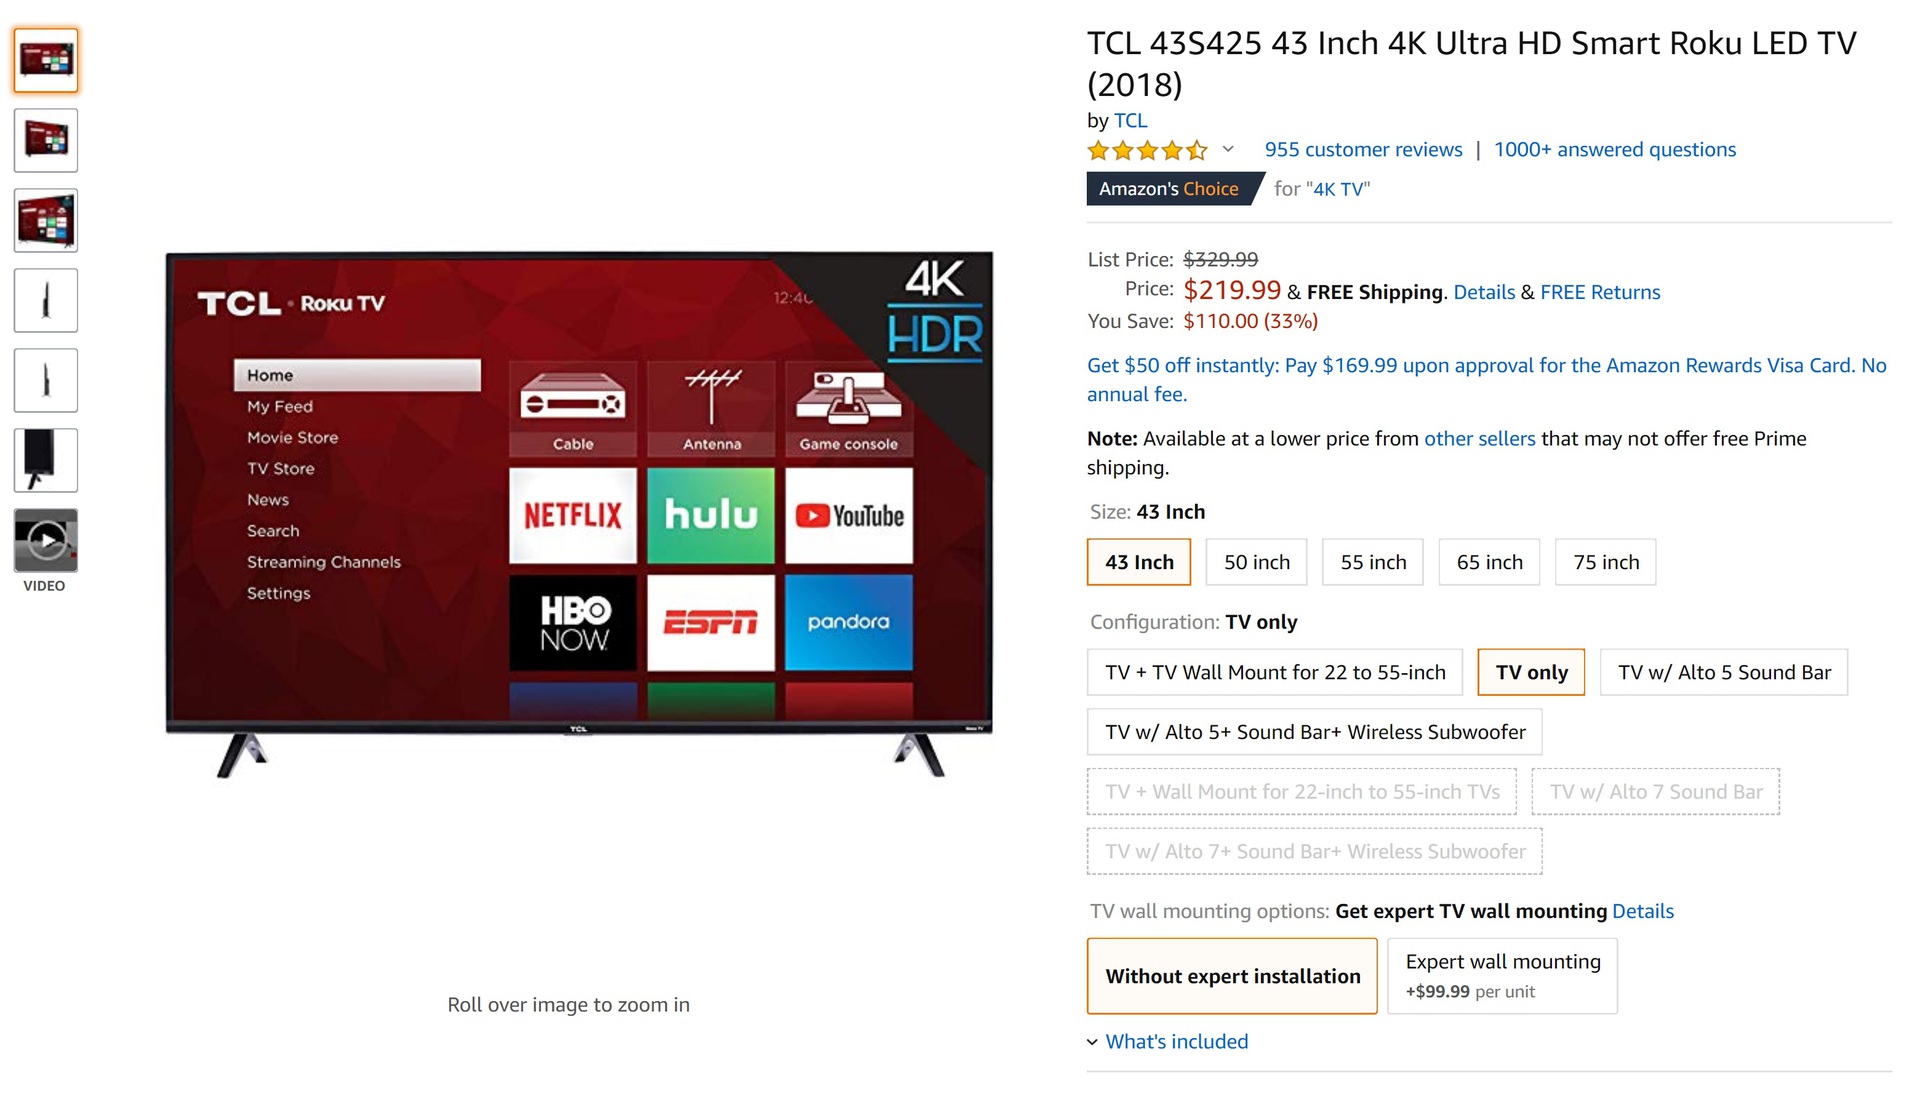 Amazon TCL Roku TV 4K store page. 